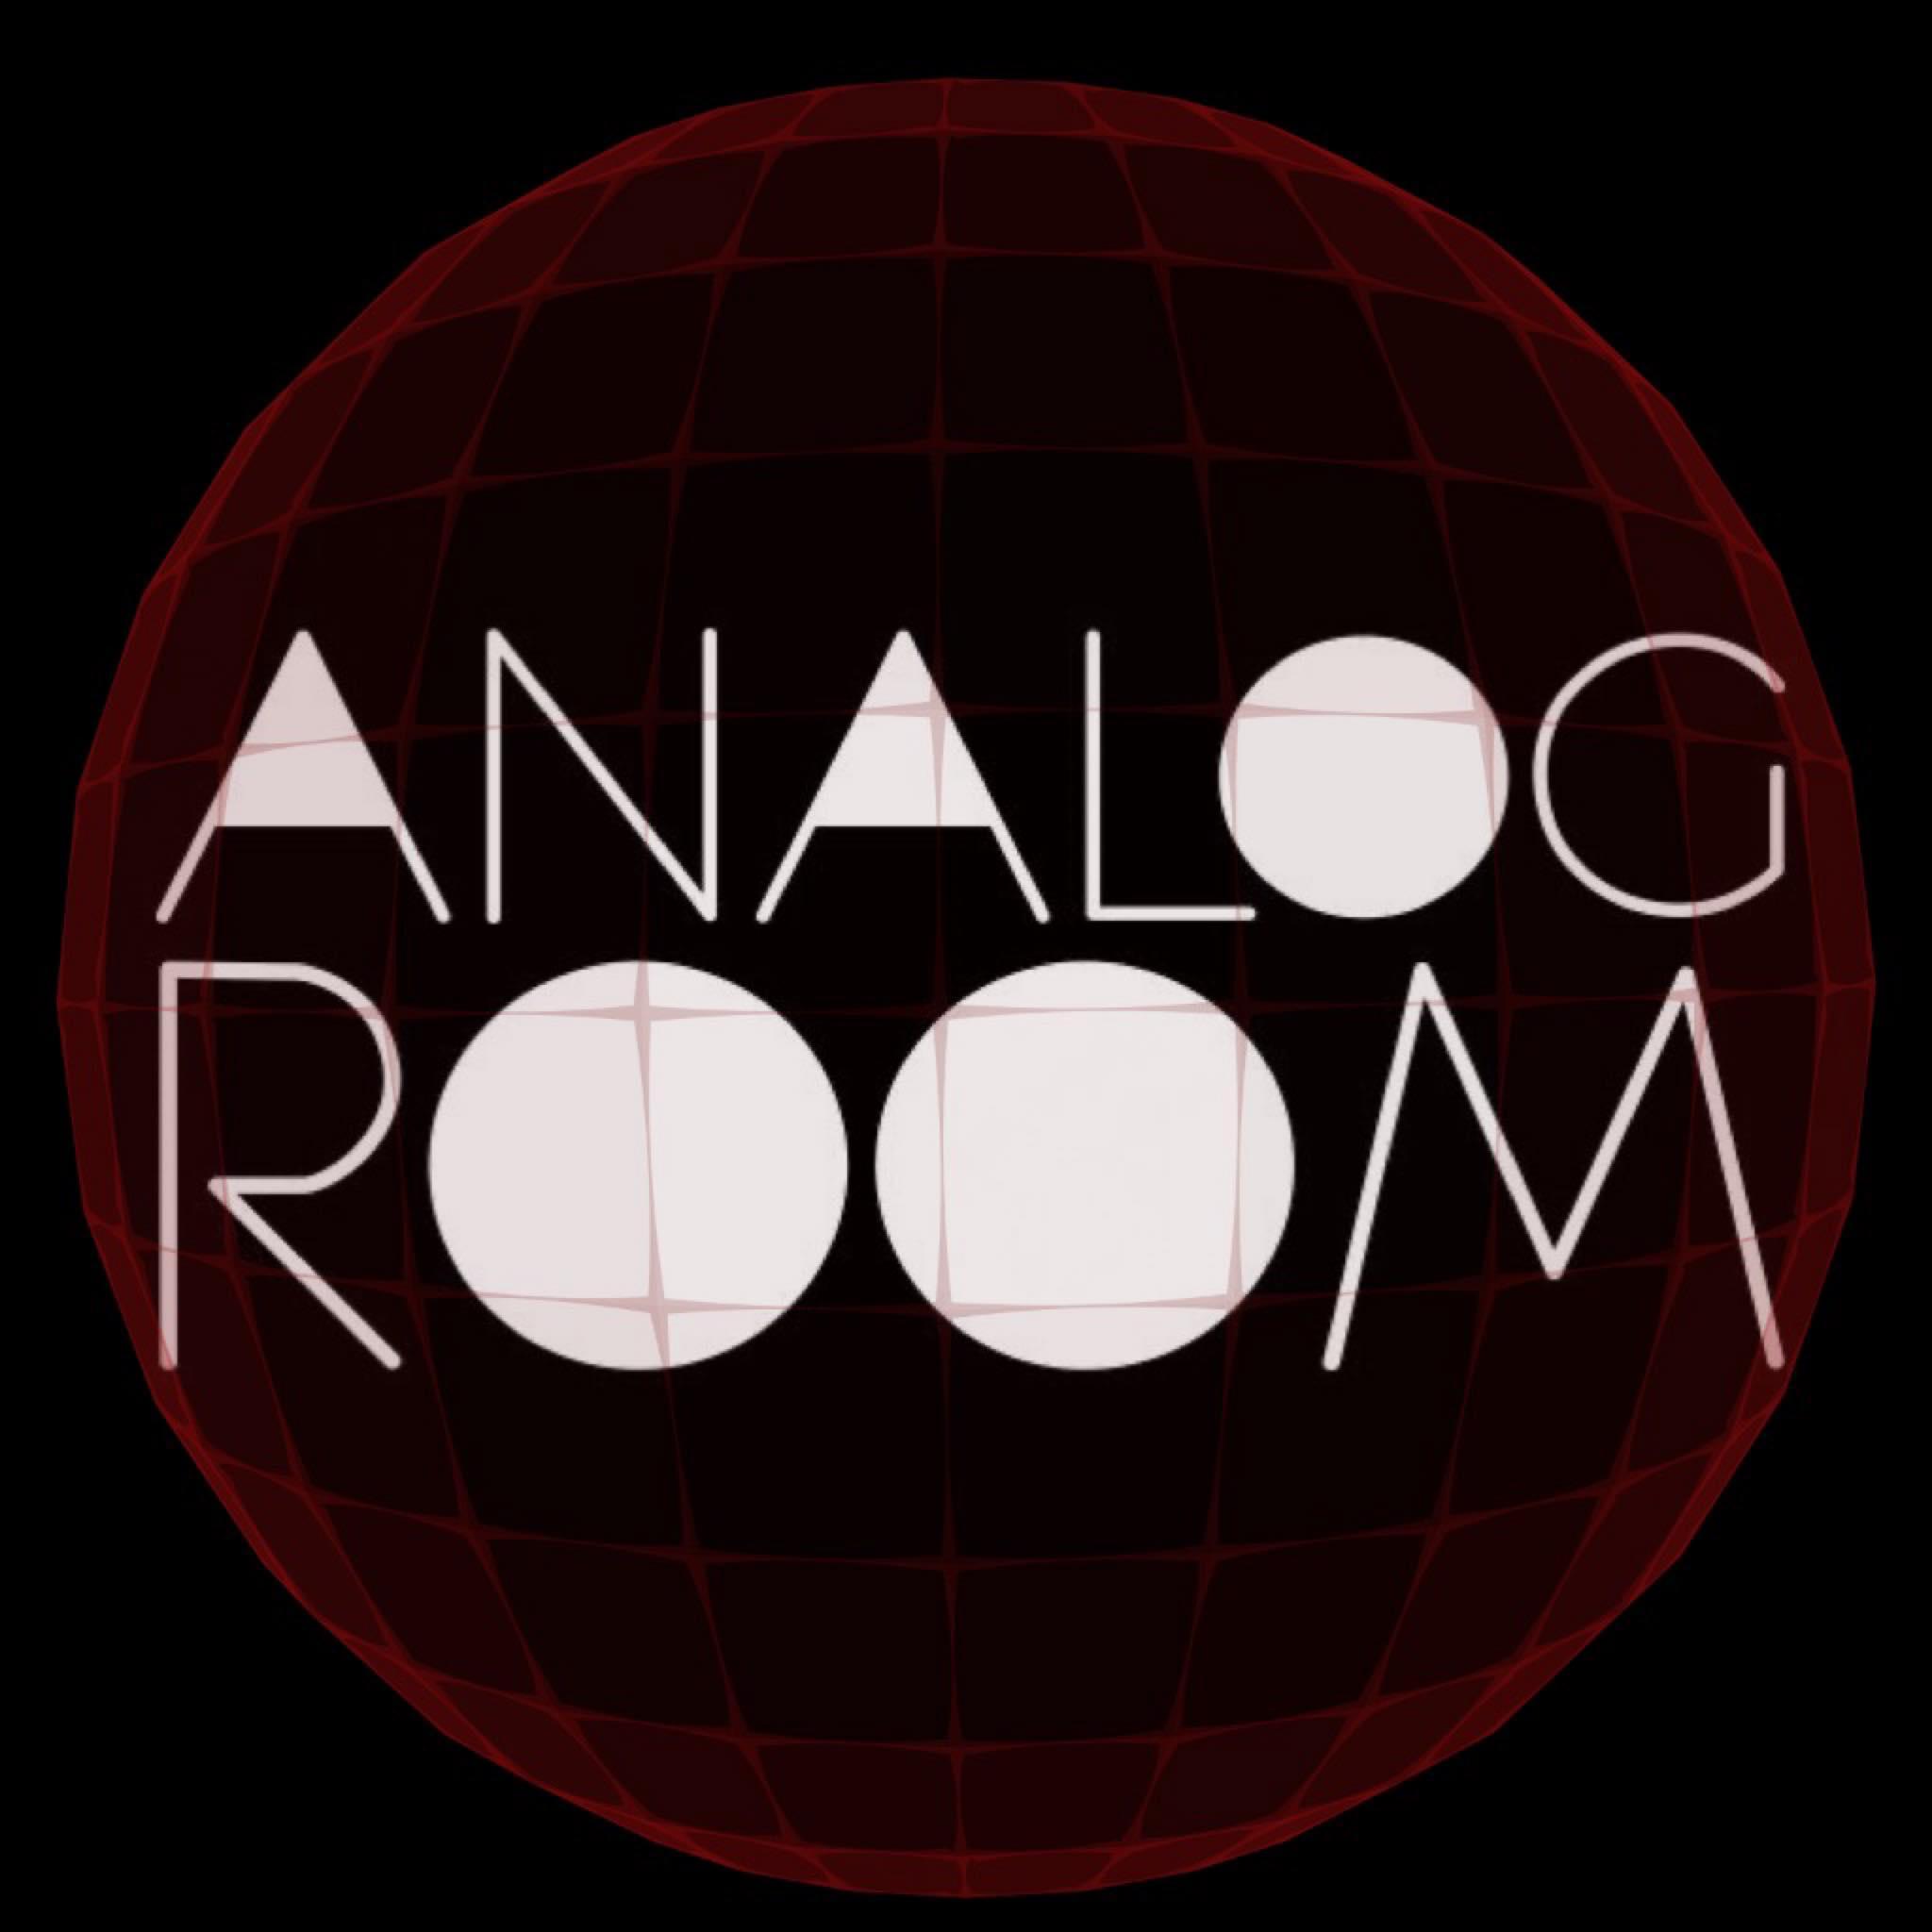 Analog Room pres. Delano Smith / Todd / Maks / Mo Ezaby